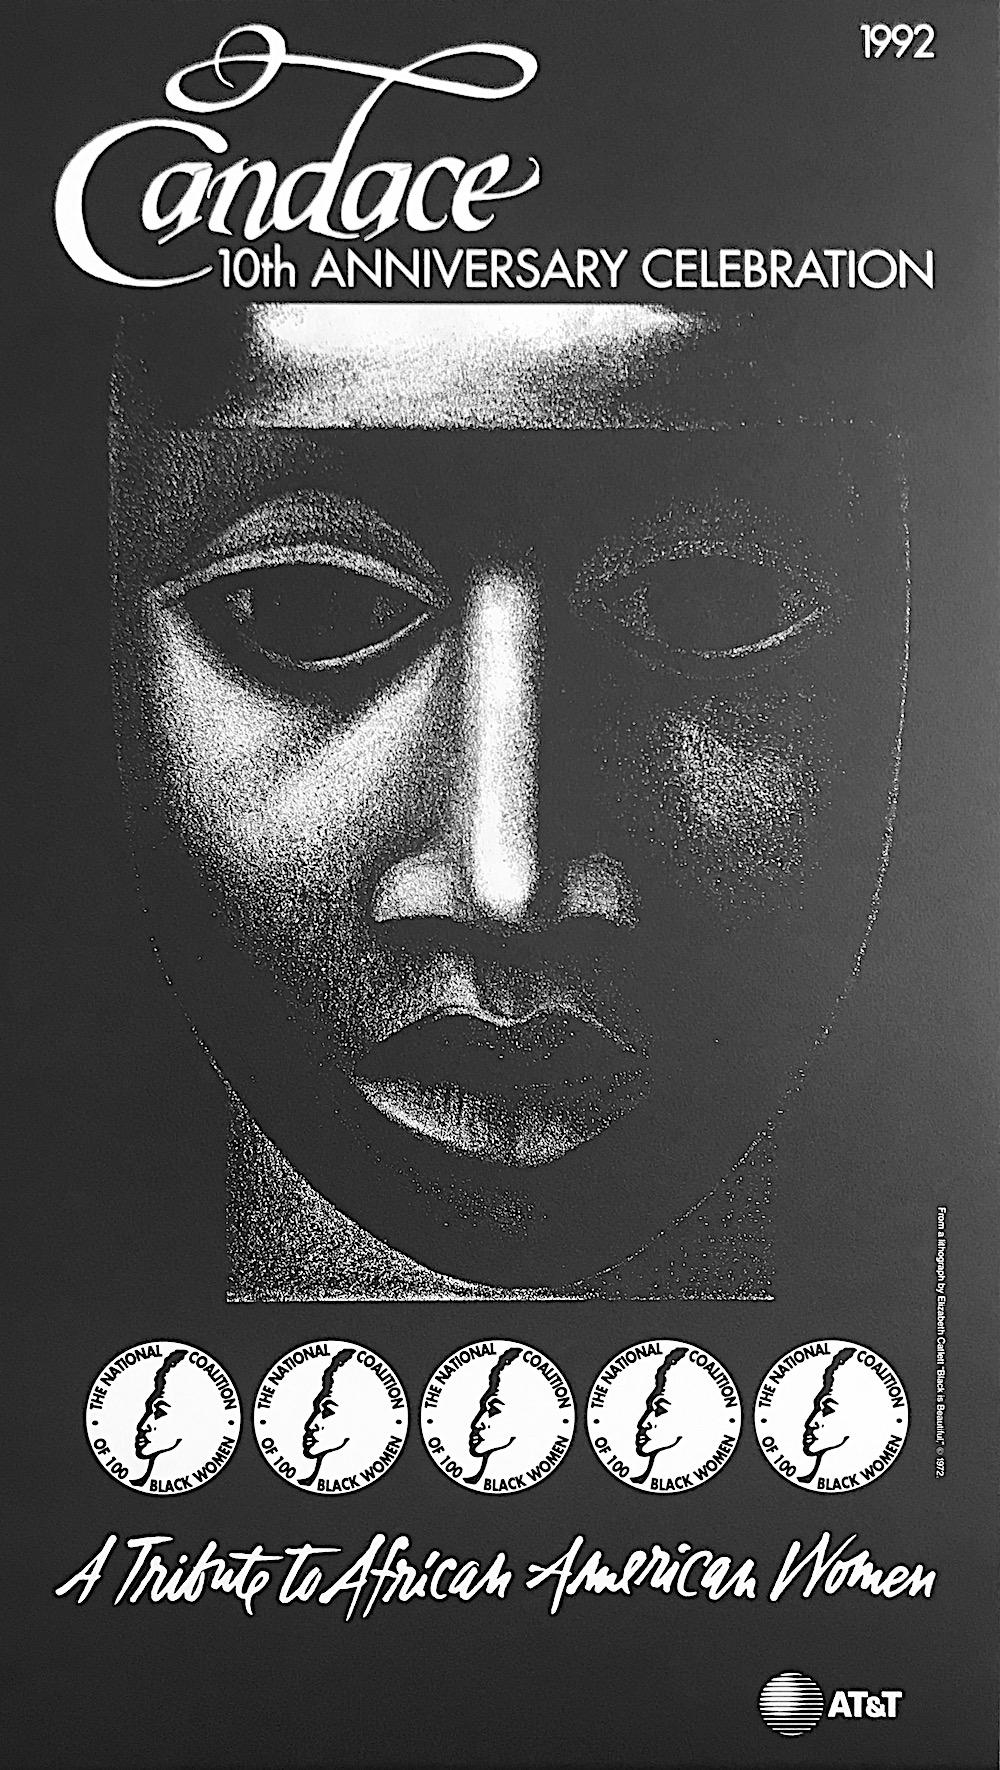 Elizabeth Catlett Portrait Print – CANDACE 1992 Hommage an afroamerikanische Frauen, Porträt einer schwarzen Frau 